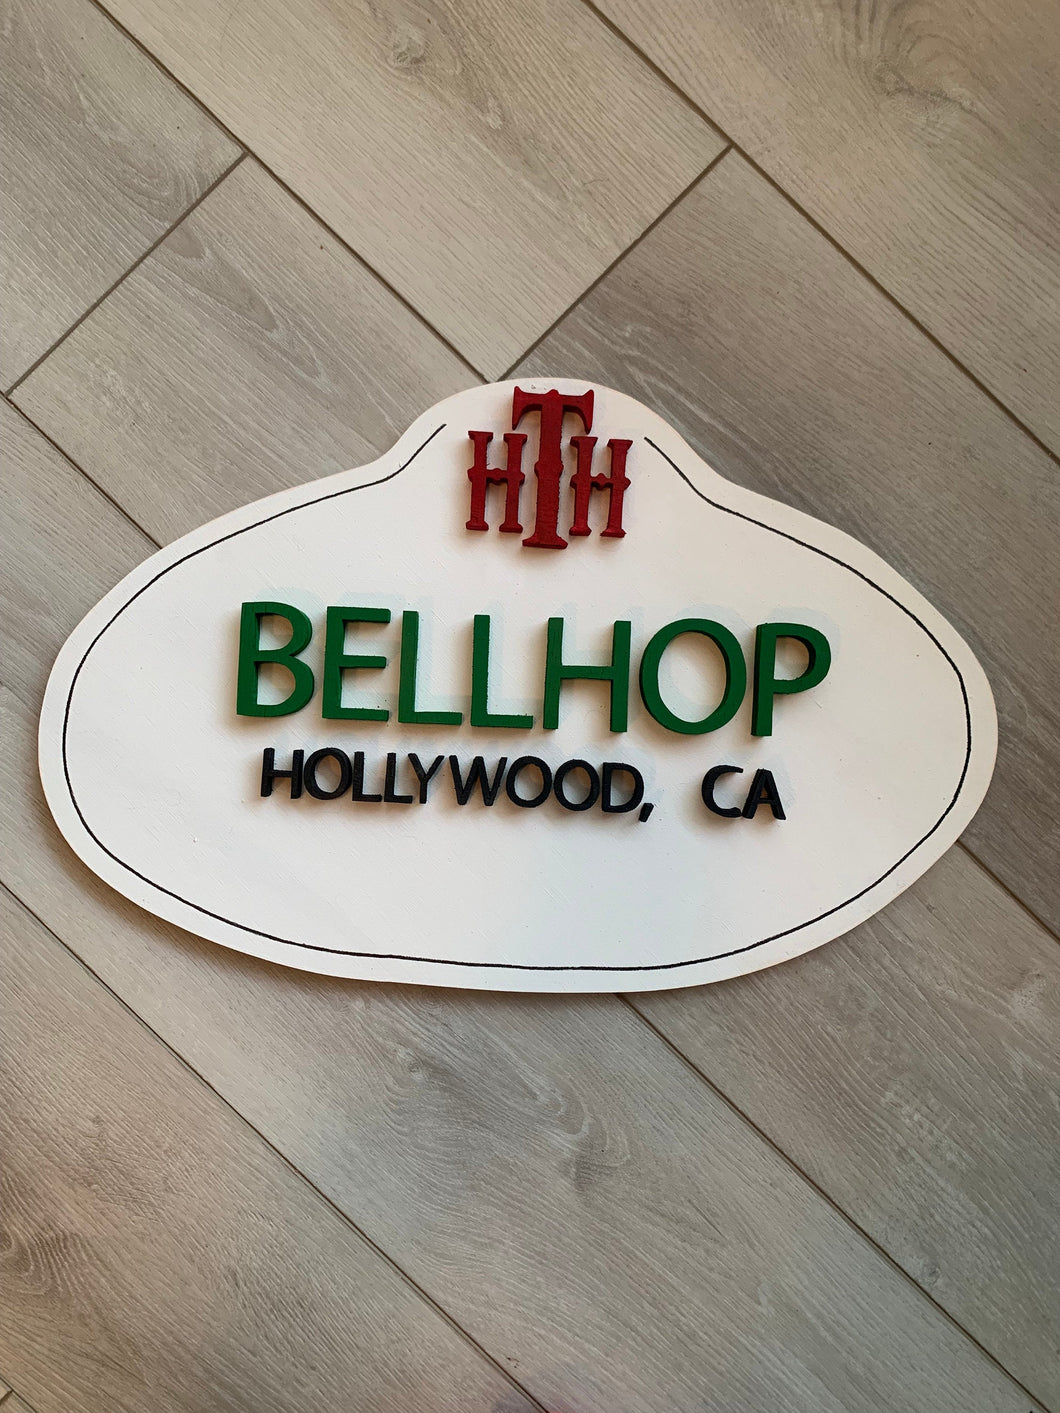 Disney Tower of Terror Bellhop Name Tag Sign